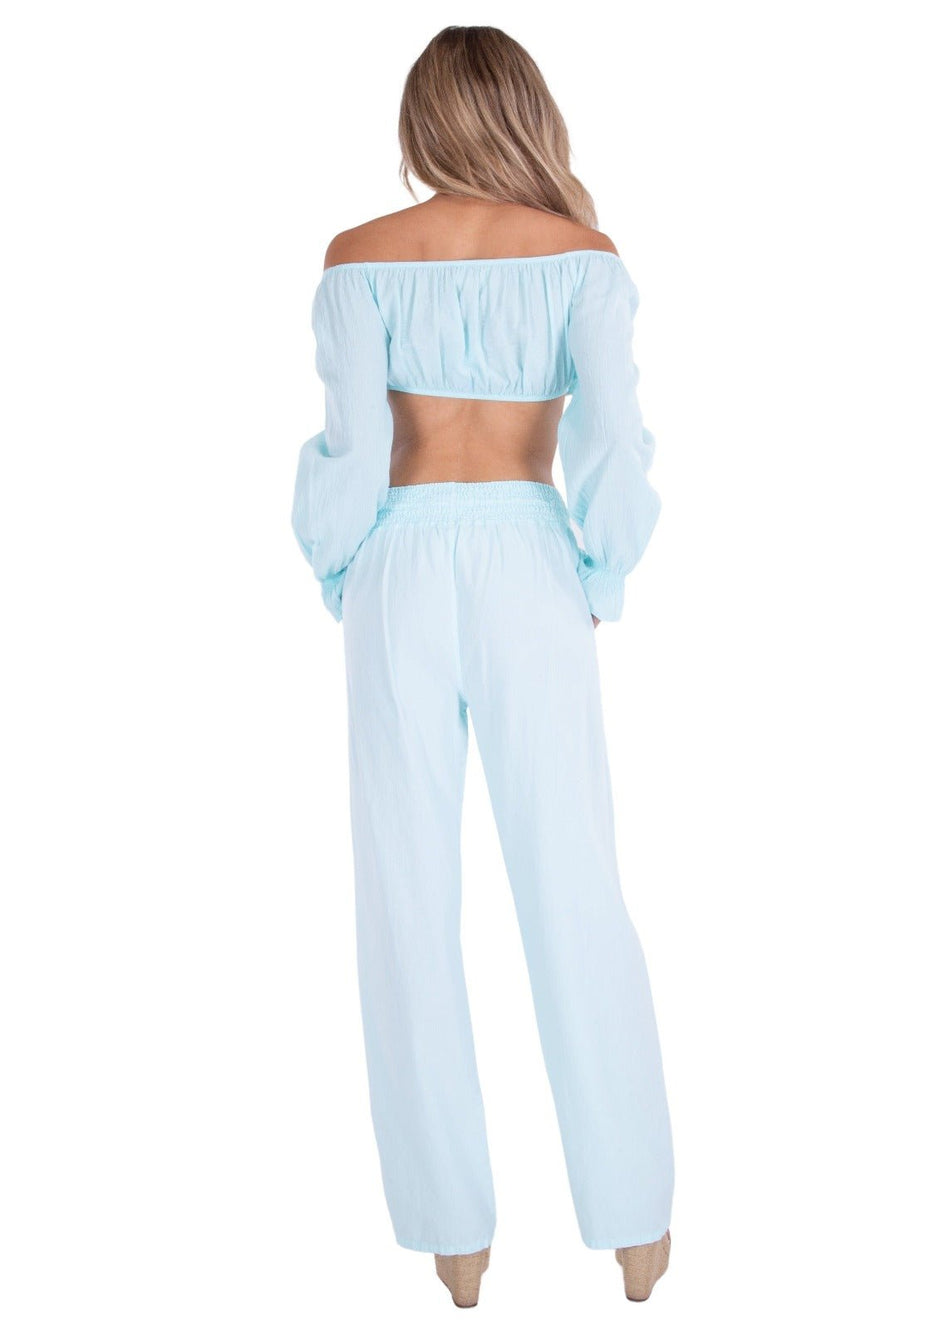 Magnolia' Crochet Front Detail Pants Baby Turquoise - Seaspice Resort Wear